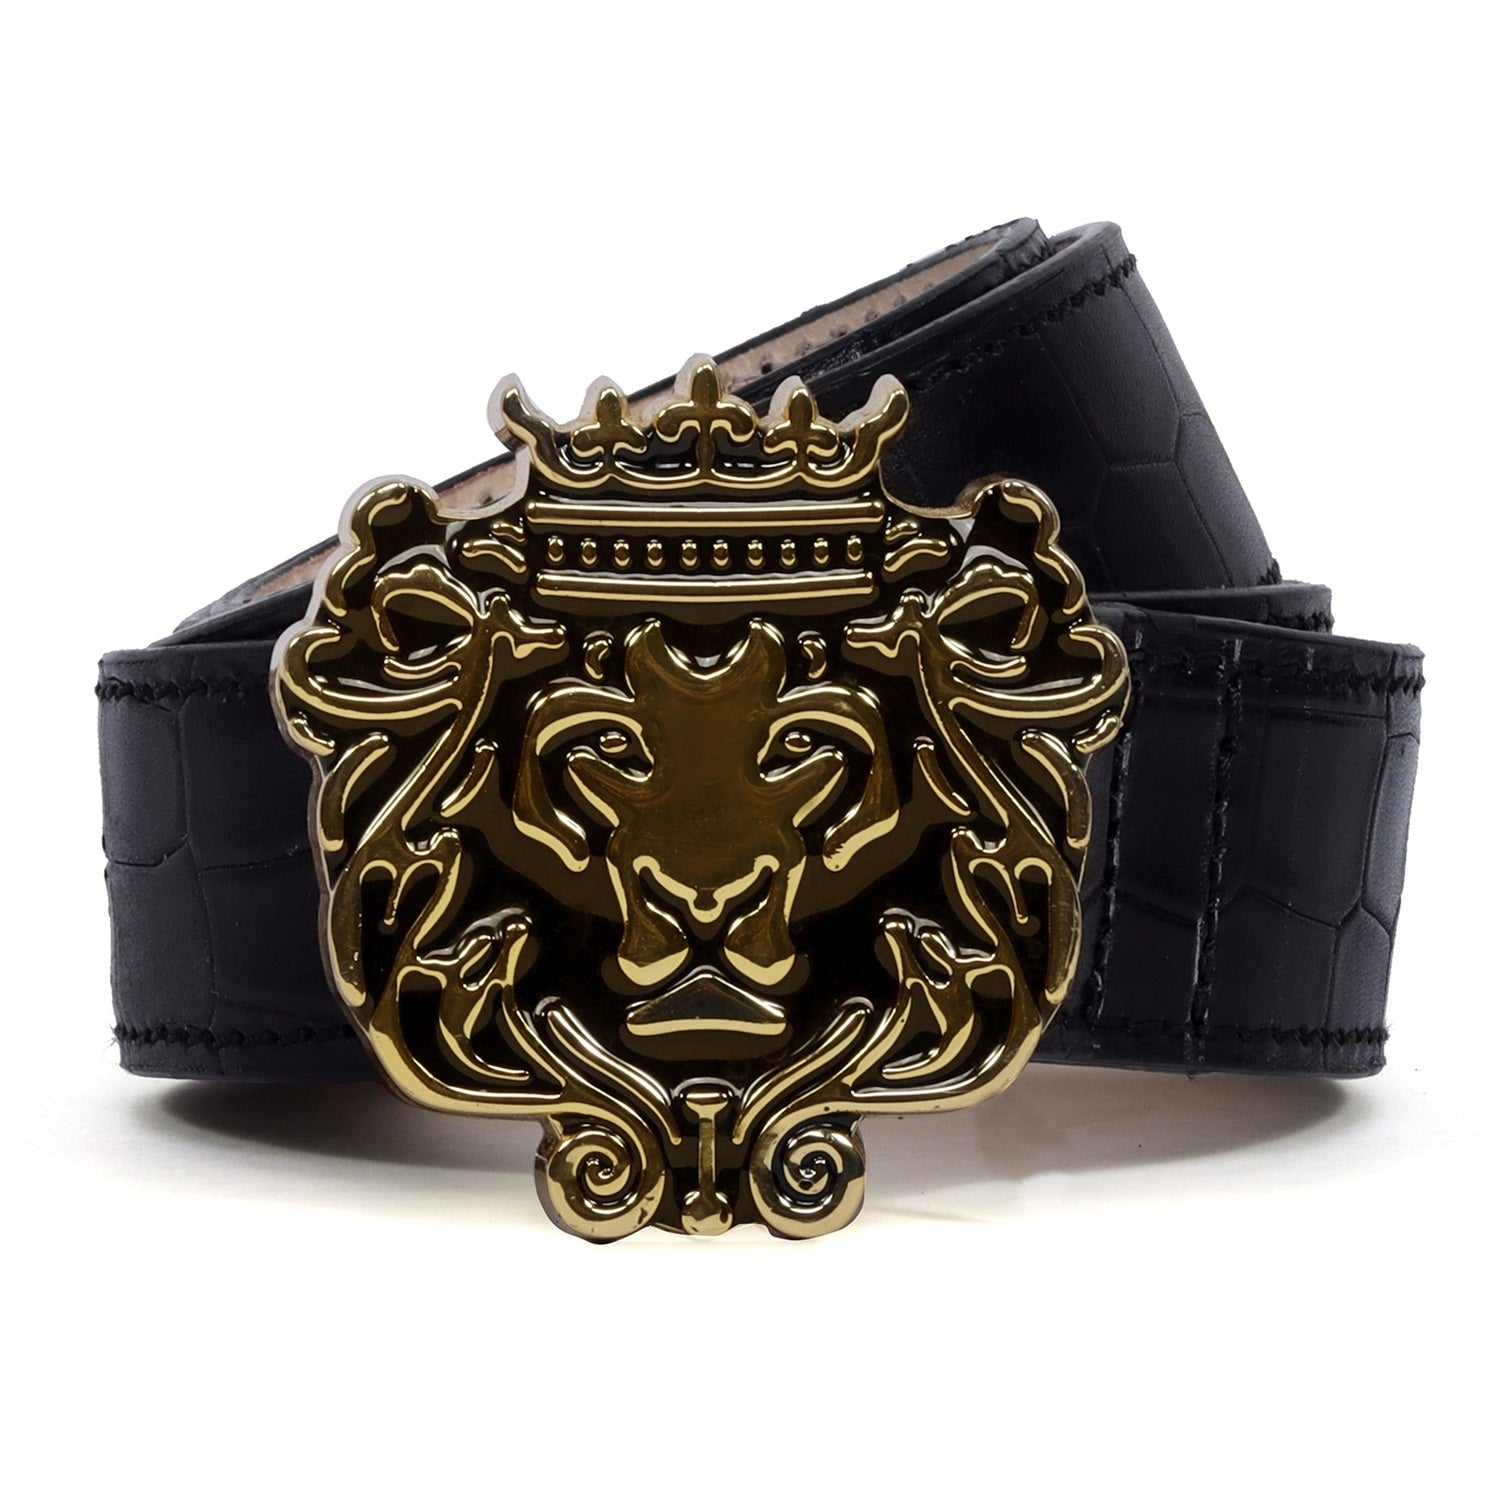 Fixed Strap "Brune & Bareskin" Brand Lion Logo Golden Buckle Deep Cut Leather Belt